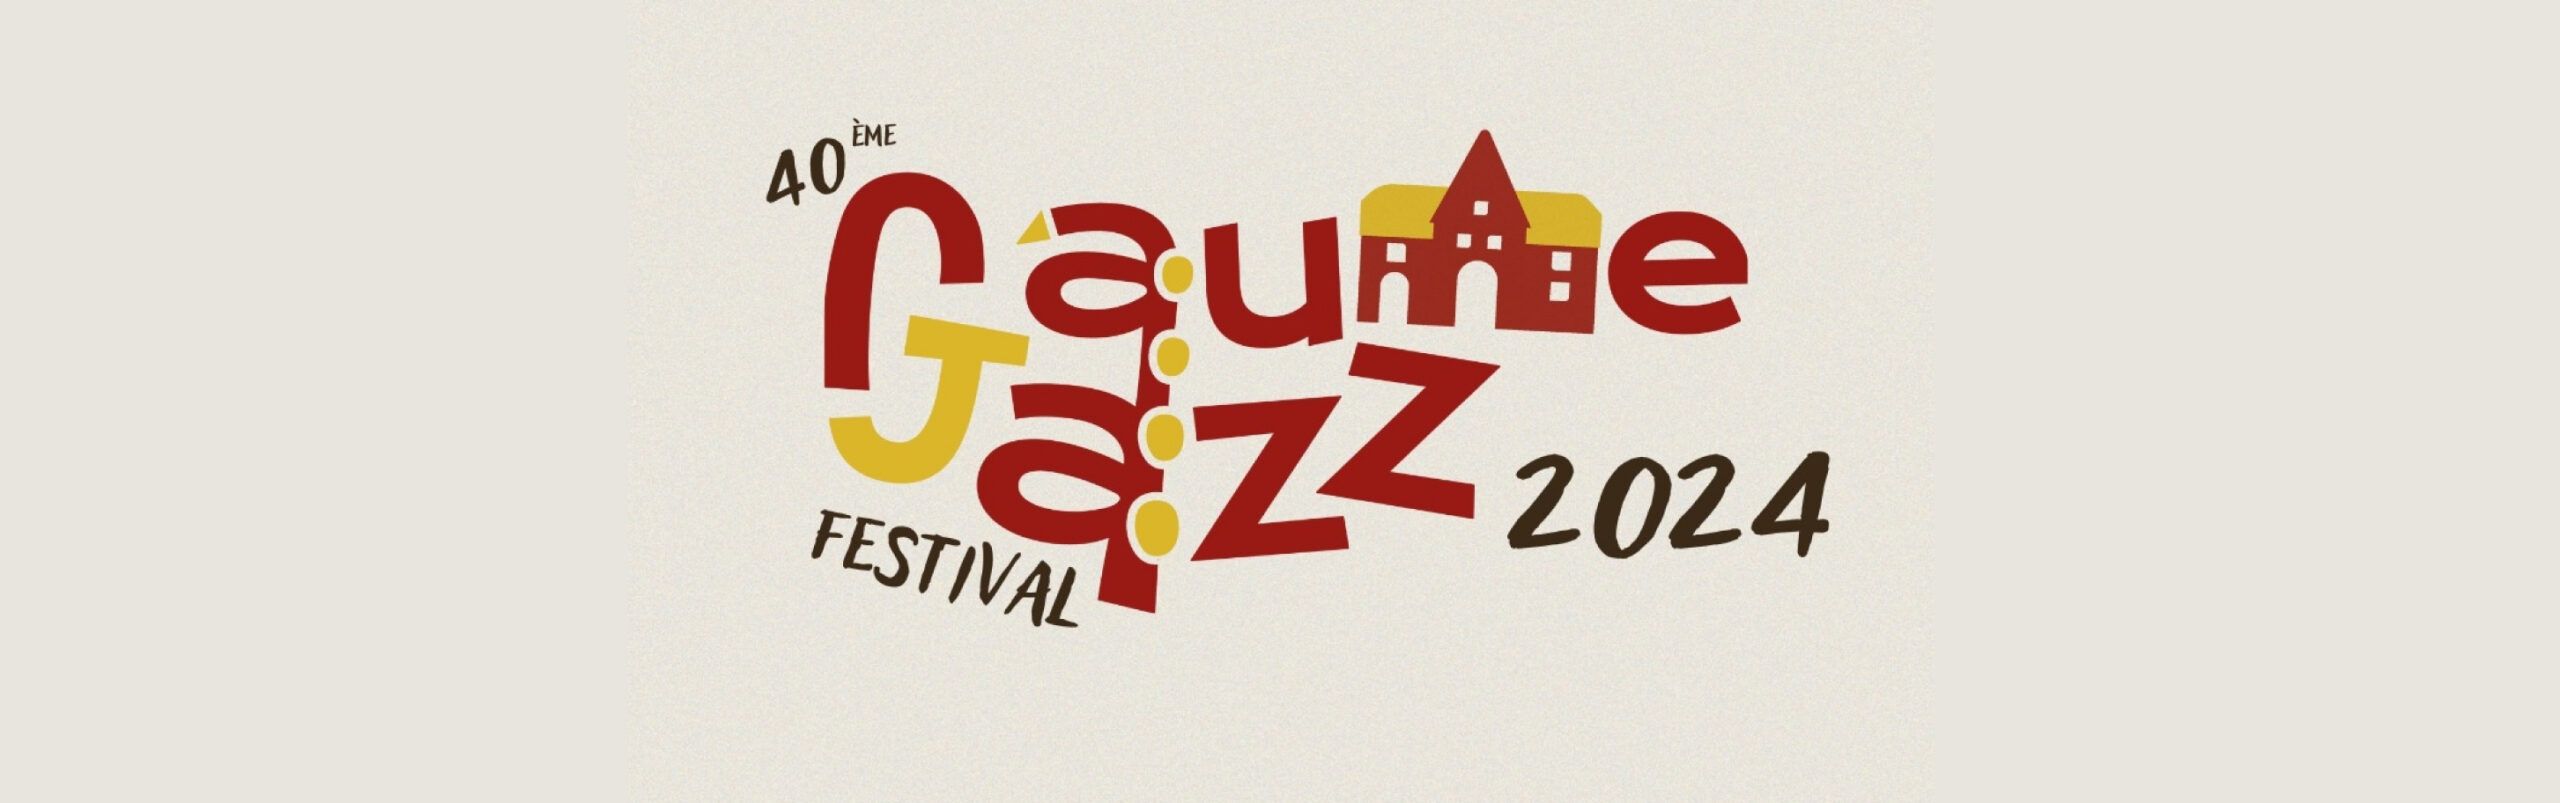 Gaume Jazz Festival header